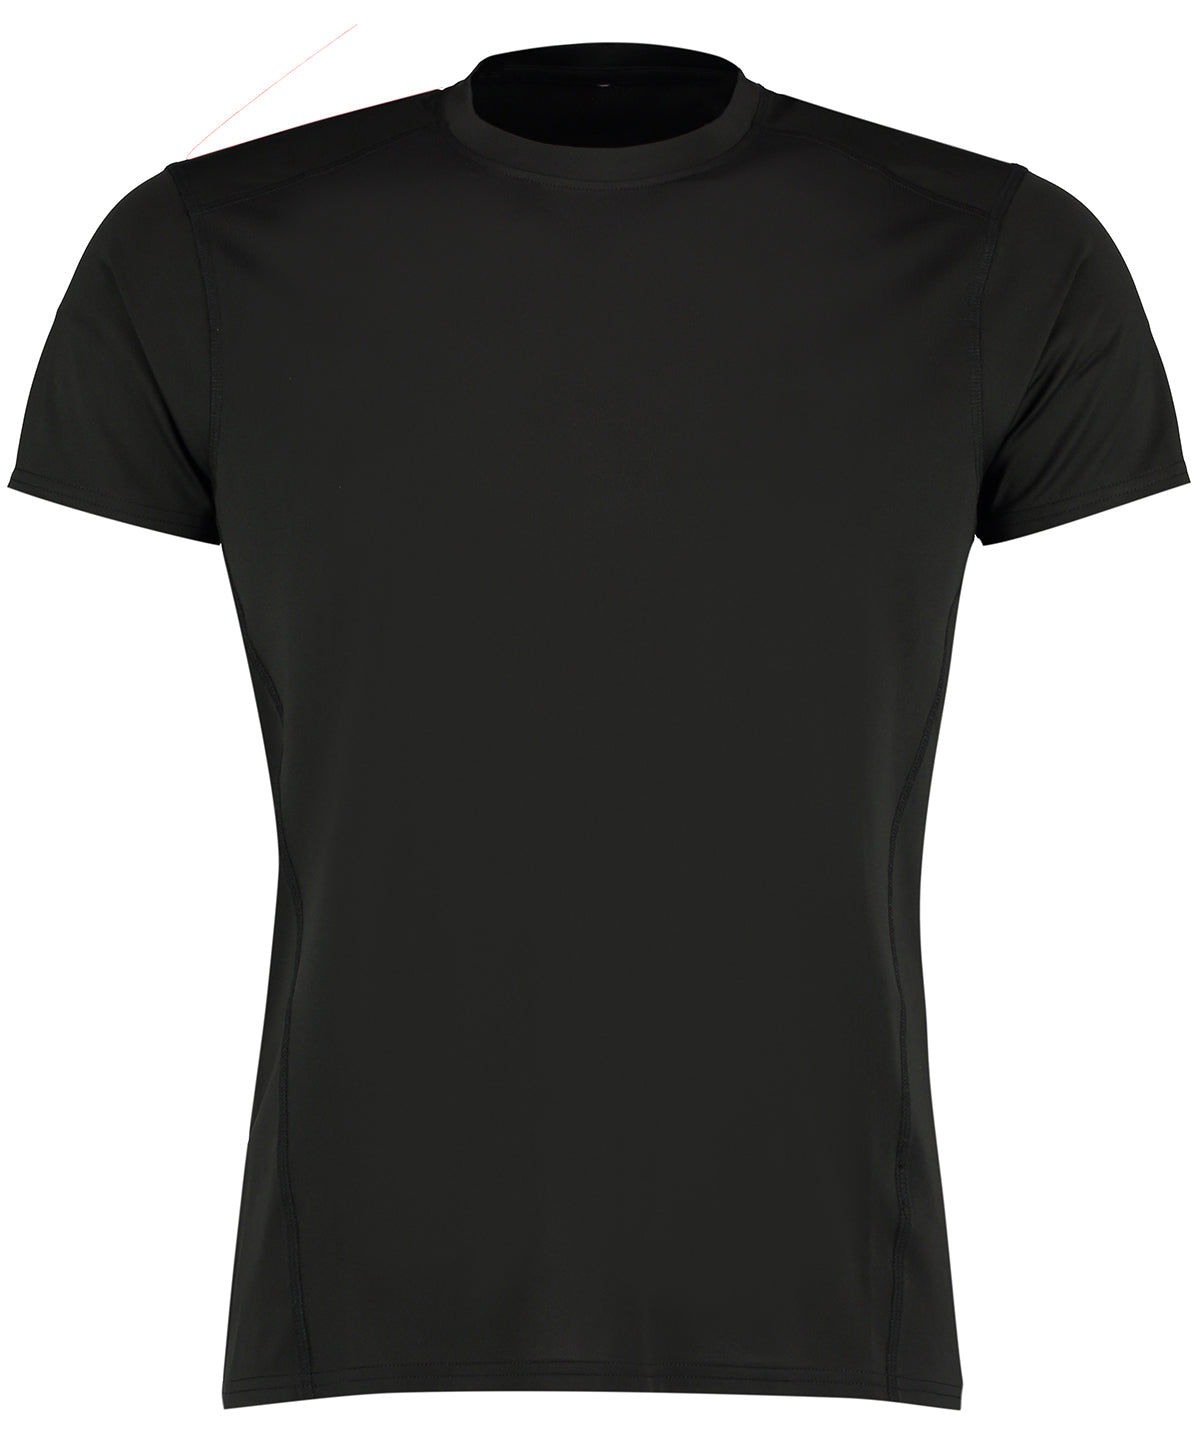 Gamegear® compact stretch t-shirt | Black